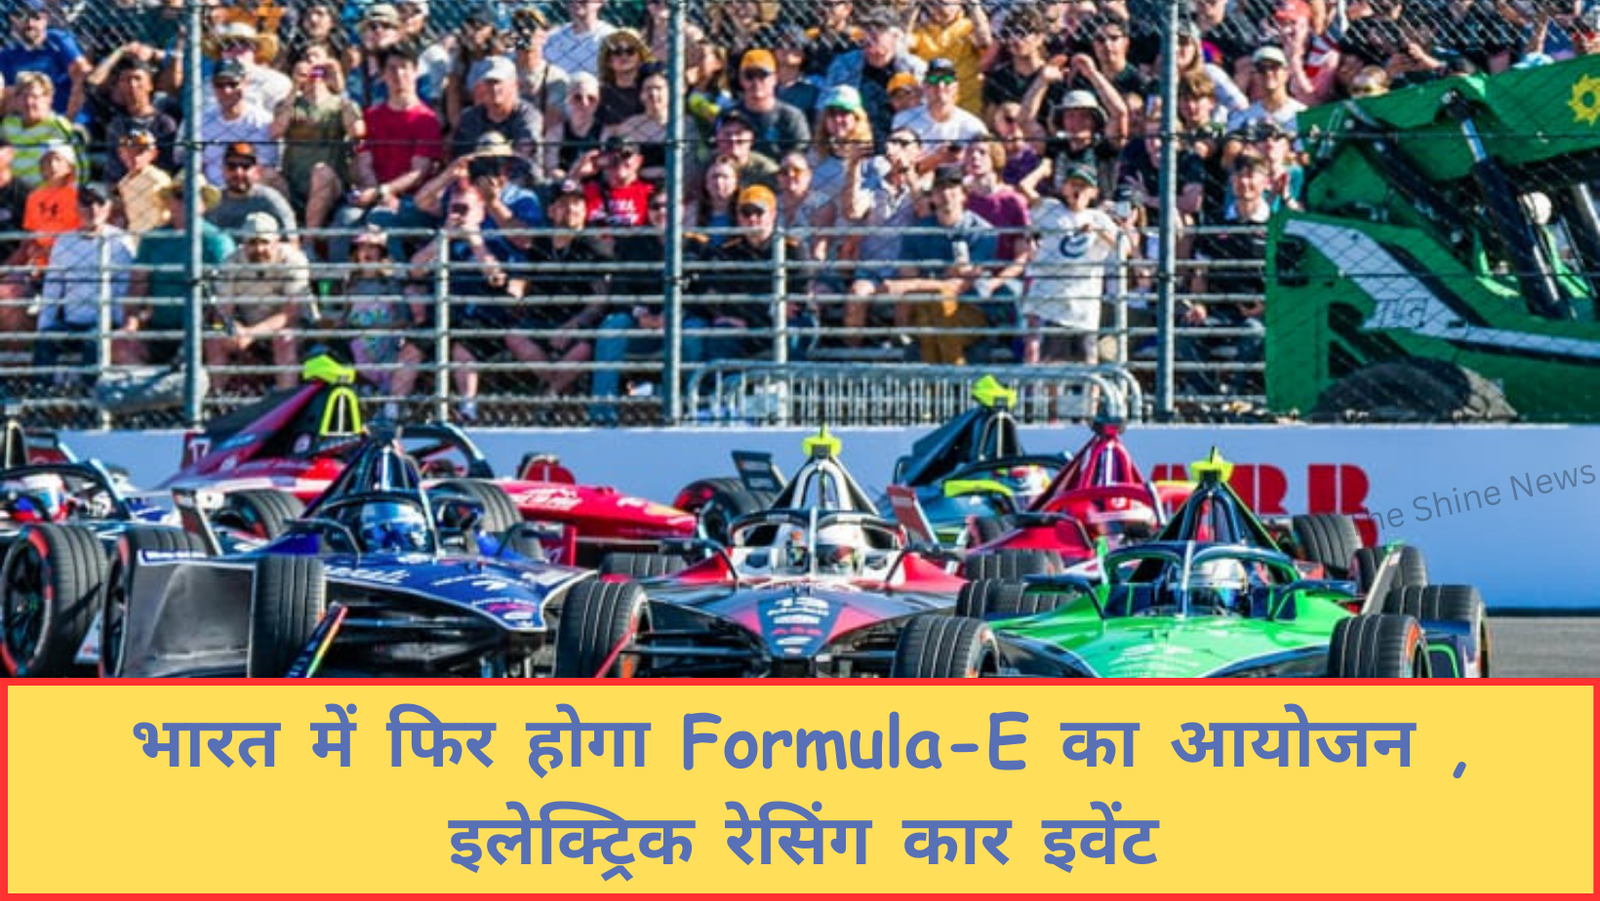 Formula-E Global Motorsport Event of Electric Racing Cars